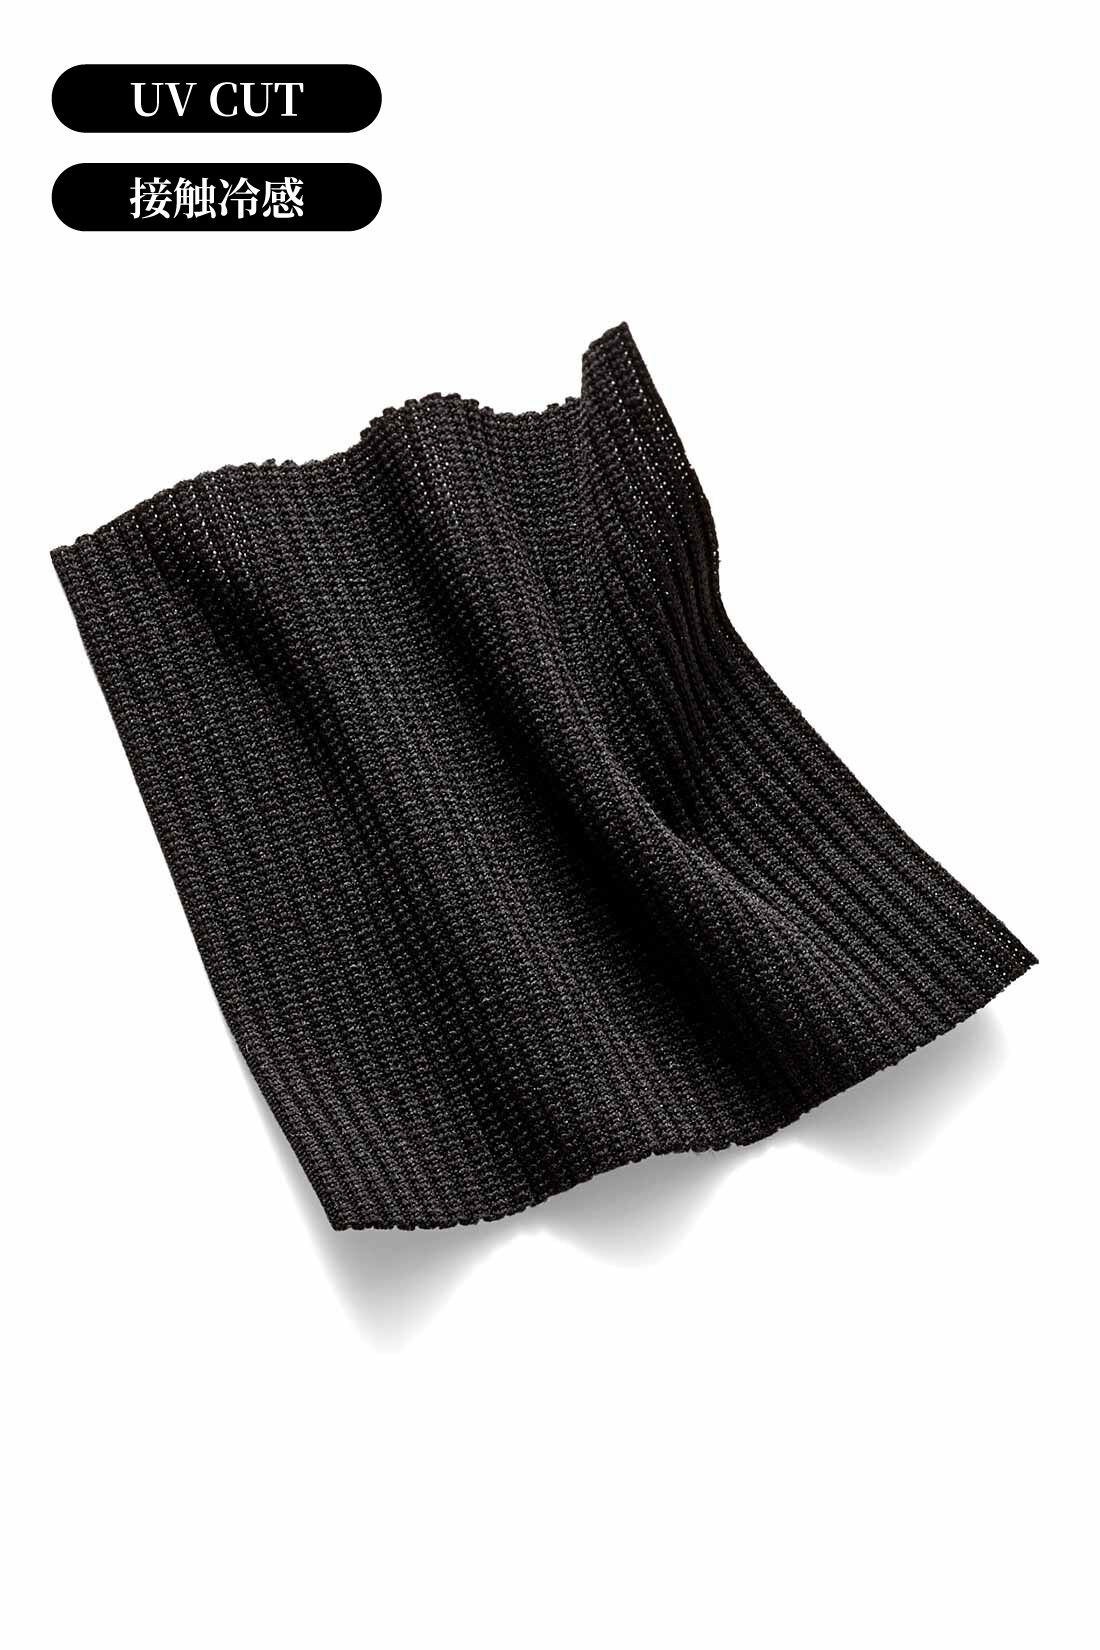 IEDIT|IEDIT[イディット]　福田麻琴さんコラボ リブ素材のラッシュガードカーディガン〈ブラック〉|肌に張り付きにくく着心地も快適なストレッチのきいた細めリブ素材。洋服のように着られる上品なブラック。